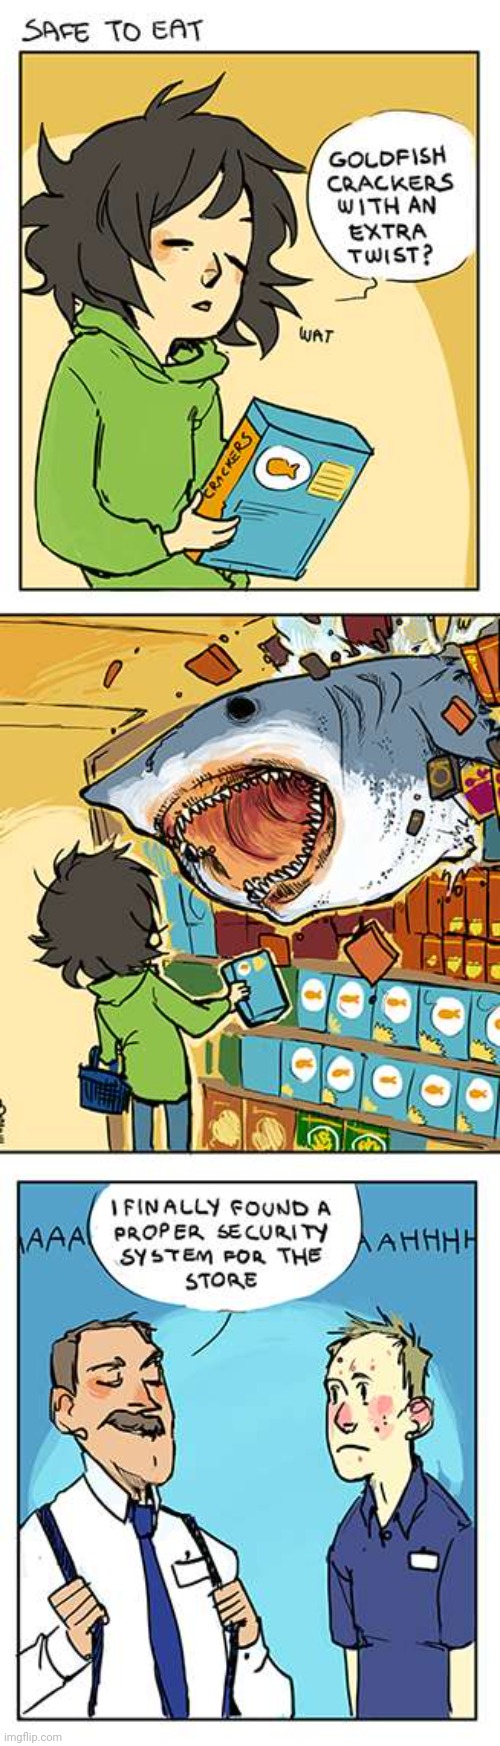 The Shark that snaps back | image tagged in sharks,shark,goldfish crackers,comics,comic,comics/cartoons | made w/ Imgflip meme maker